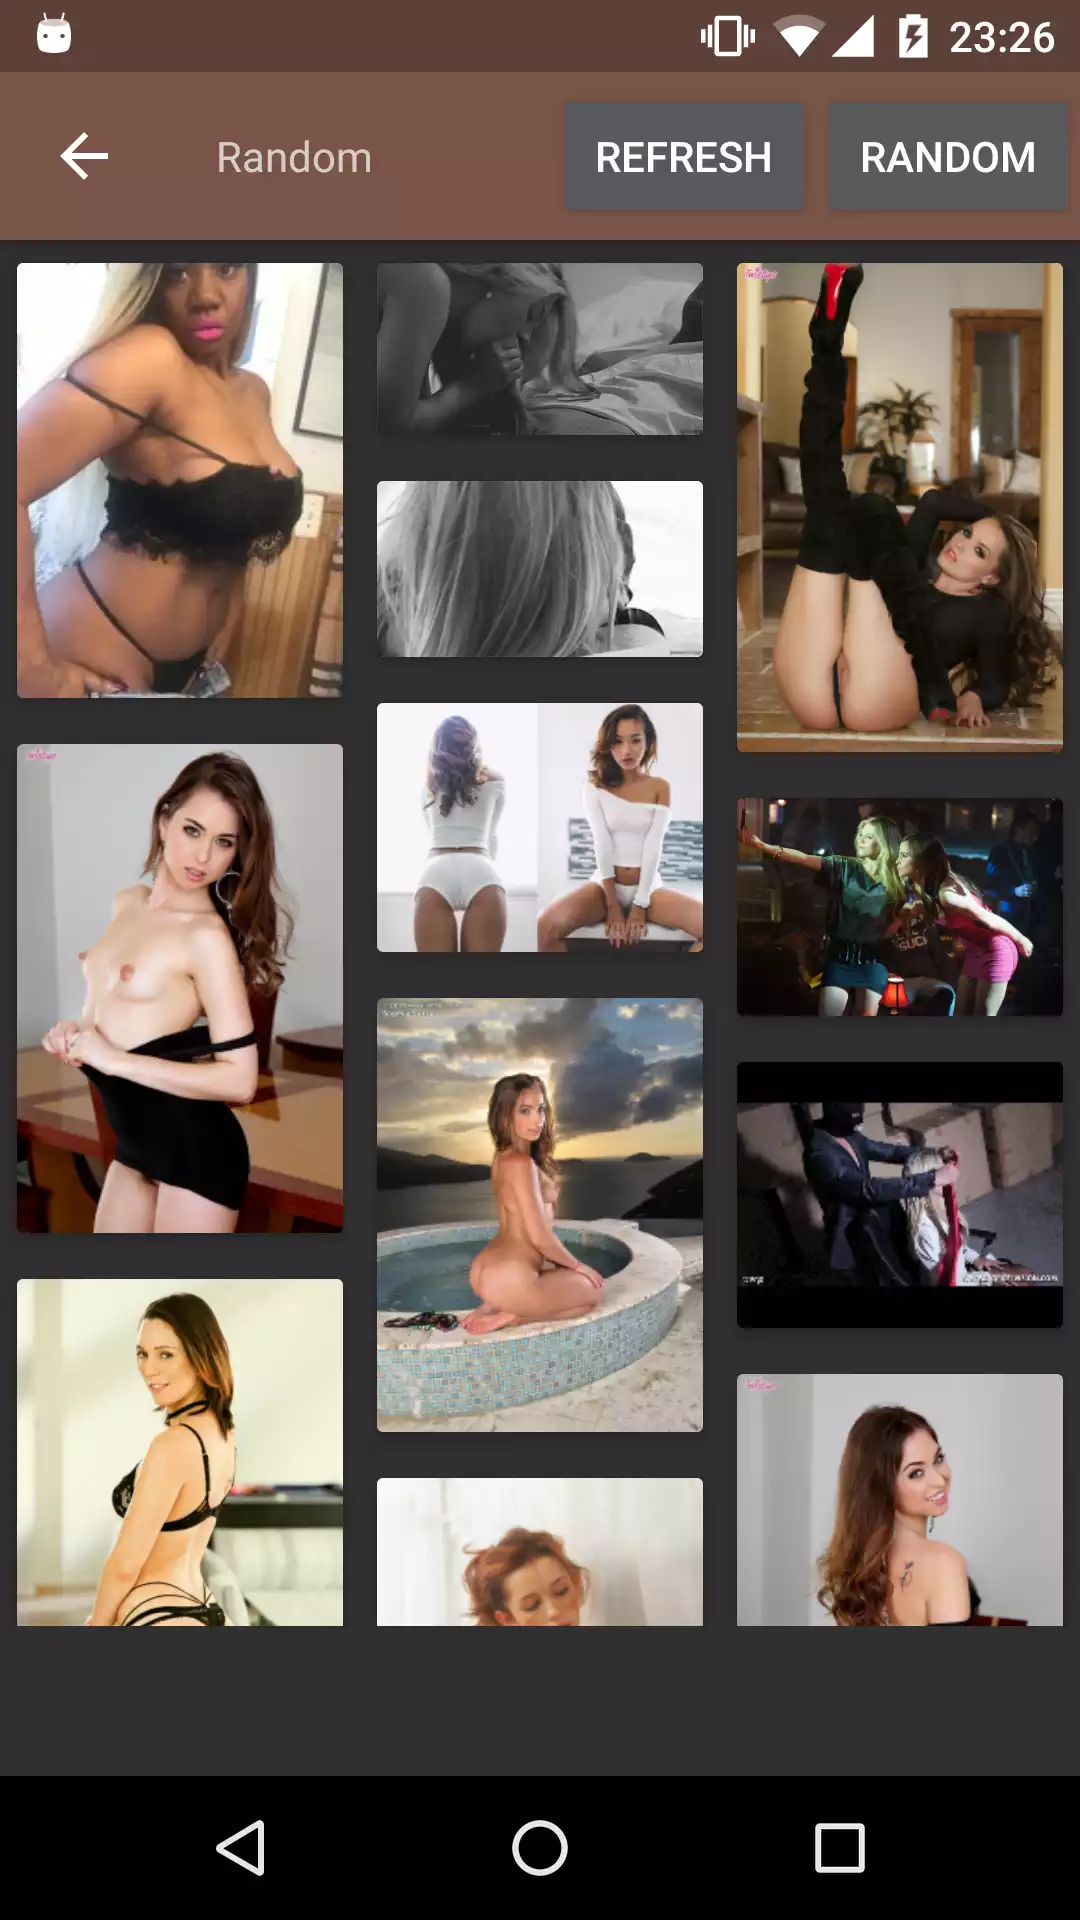 Hot pornstar pics porn,finder,hentie,image,galleries,erotic,download,hentai,pick,apk,pornstars,black,pics,sexy,app,photos,picture